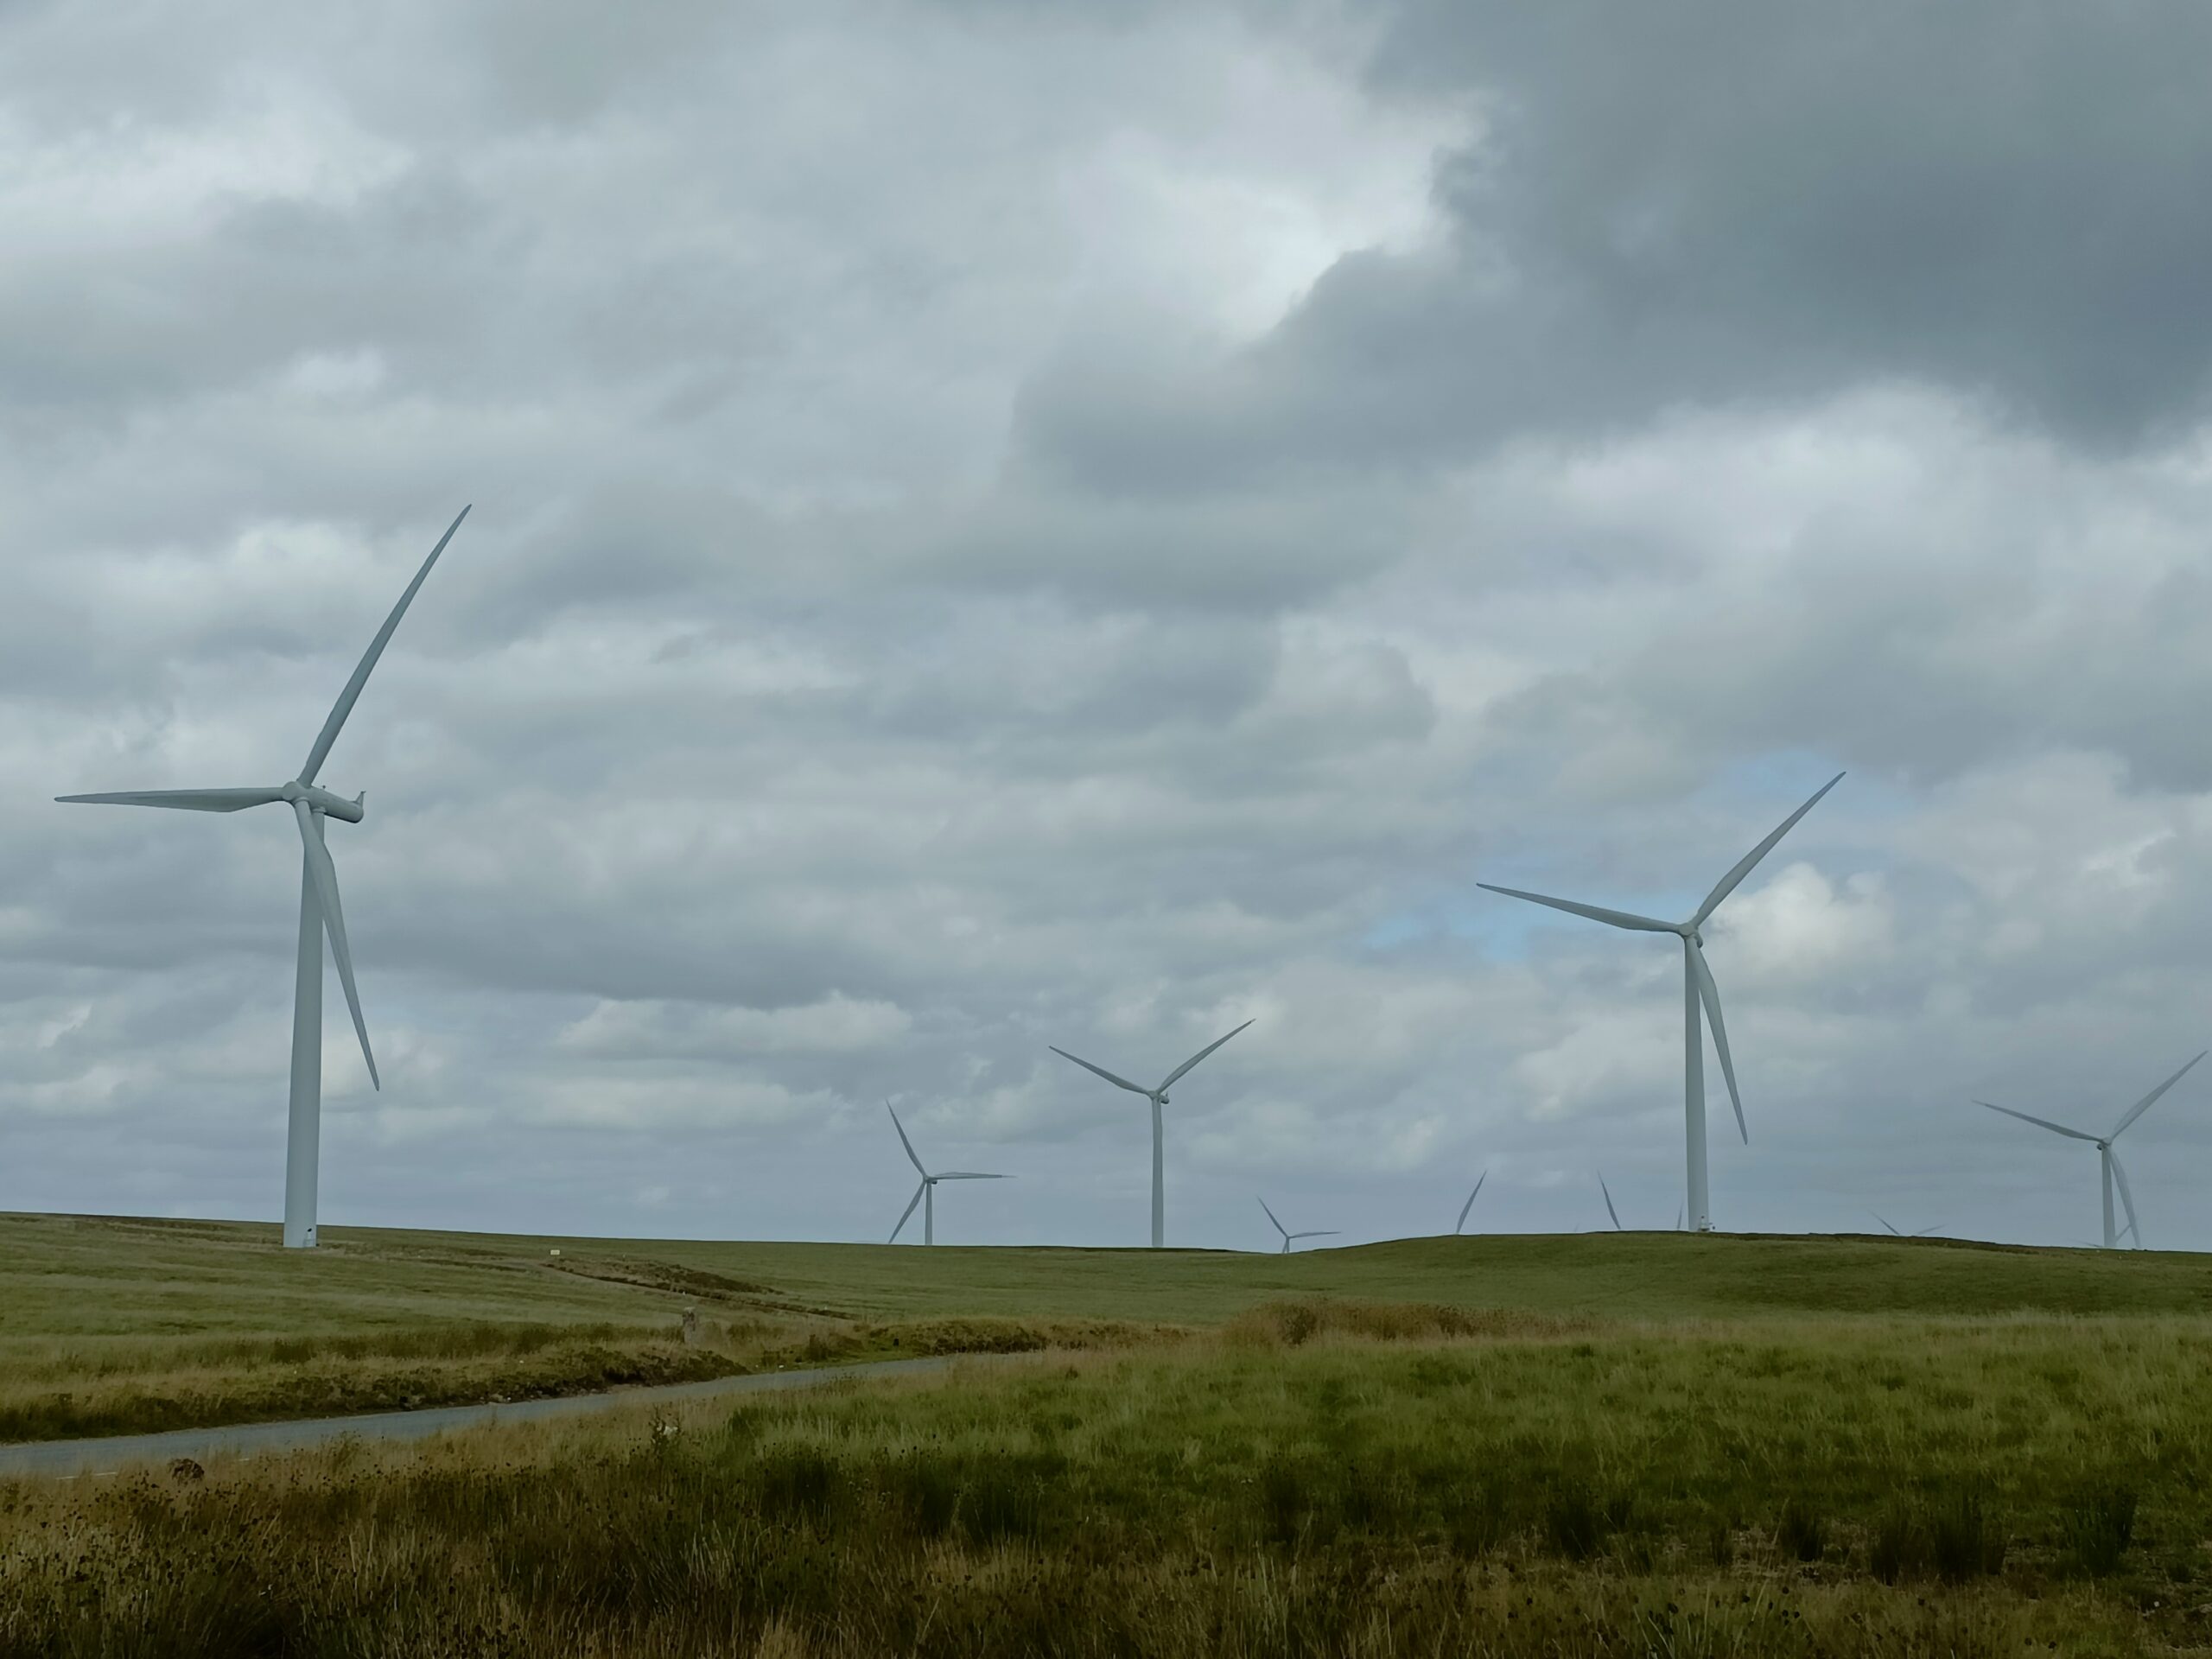 Pause on plans to build 18 wind turbines at Esgair Cwmowen